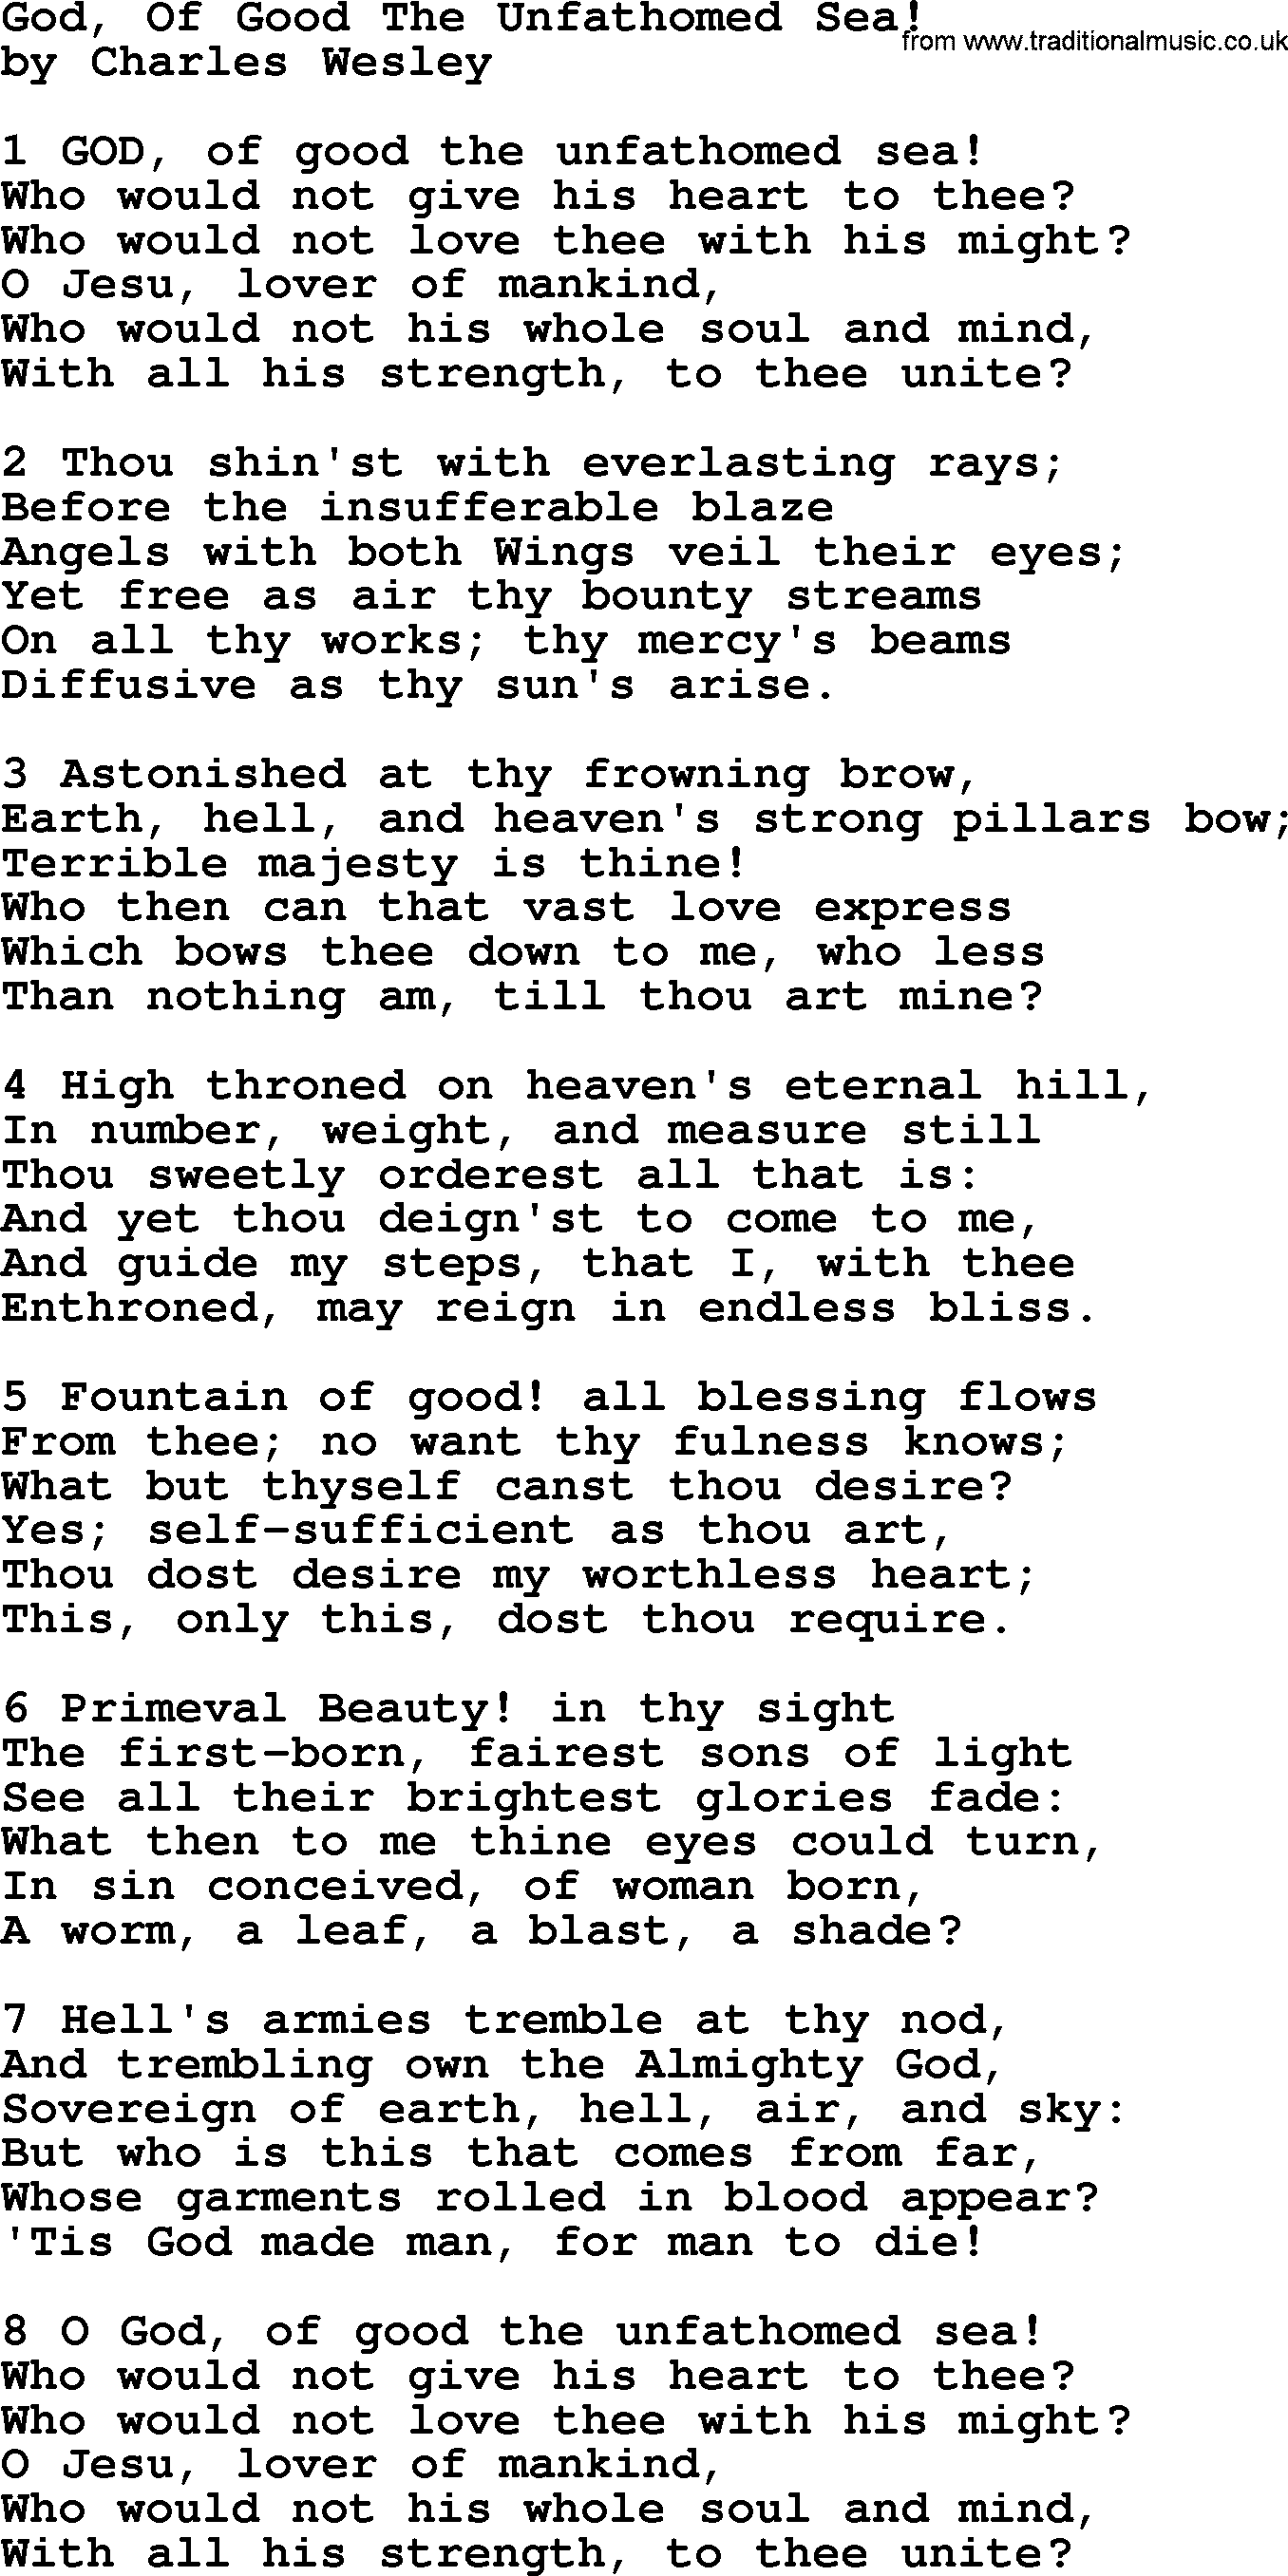 Charles Wesley hymn: God, Of Good The Unfathomed Sea!, lyrics